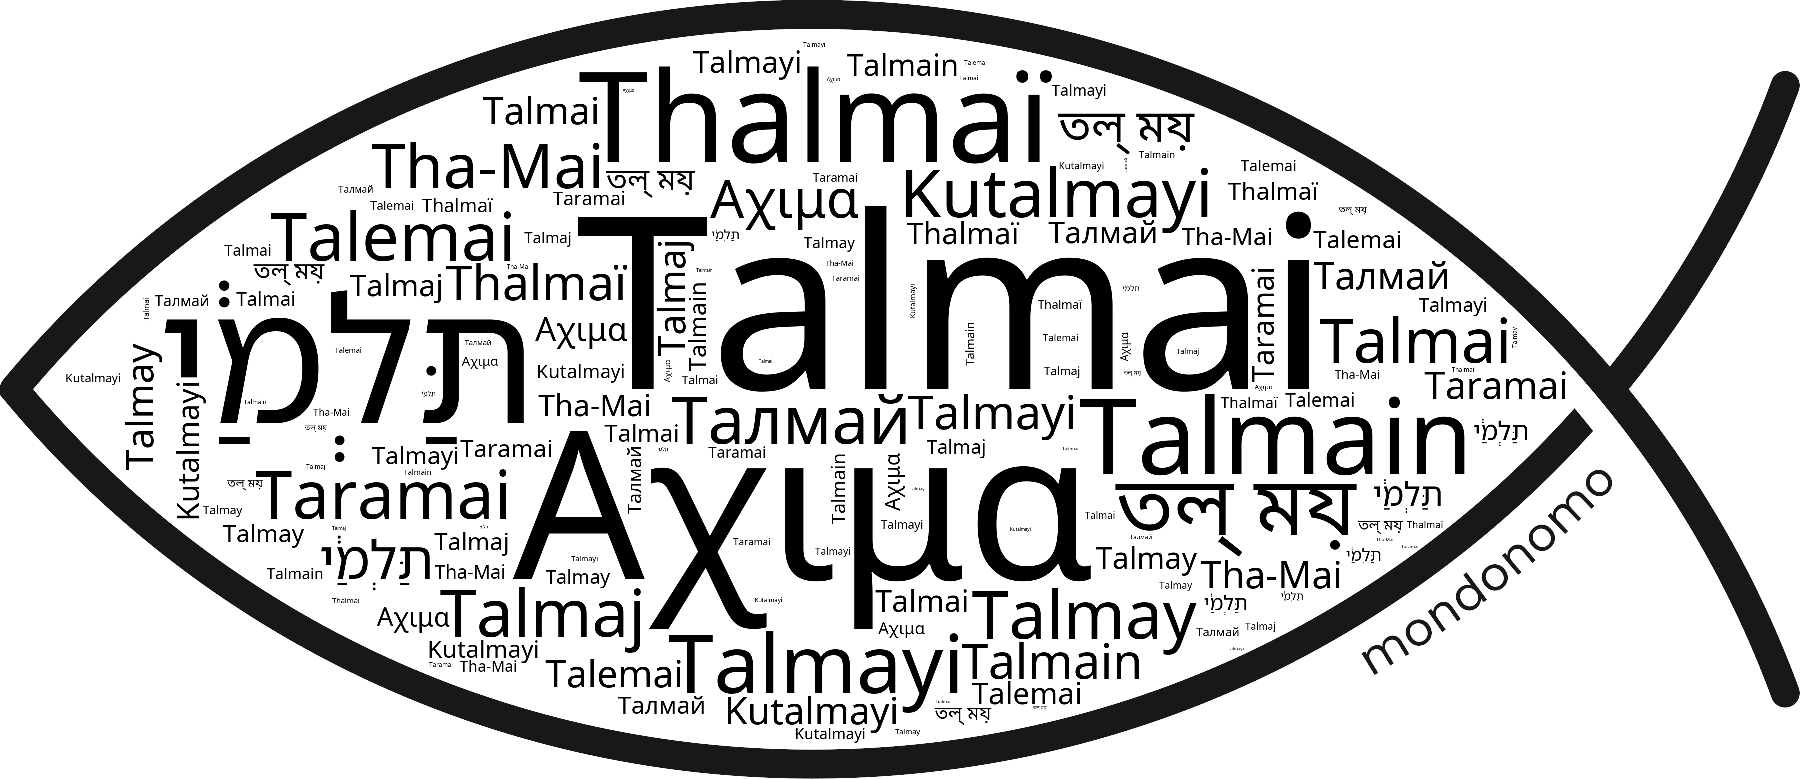 Name Talmai in the world's Bibles